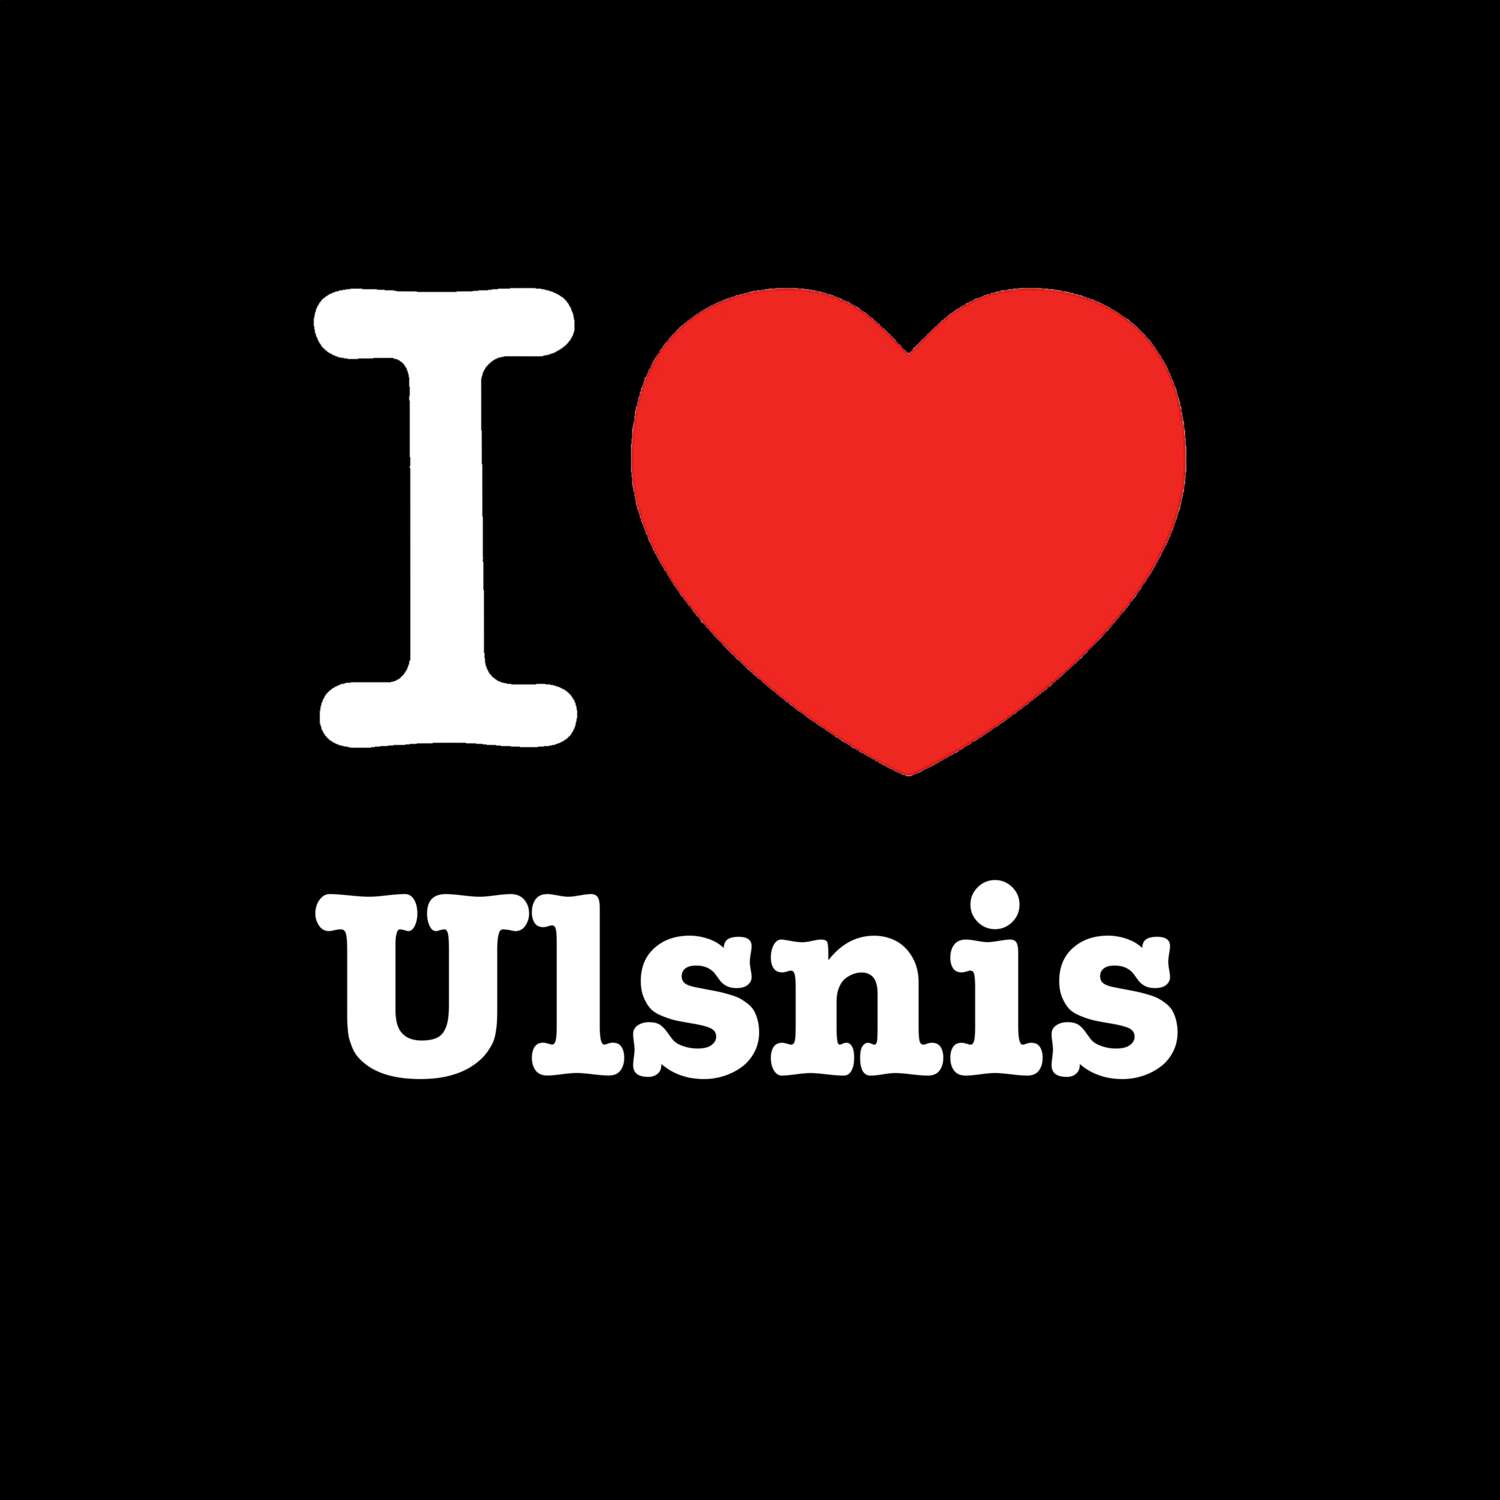 Ulsnis T-Shirt »I love«